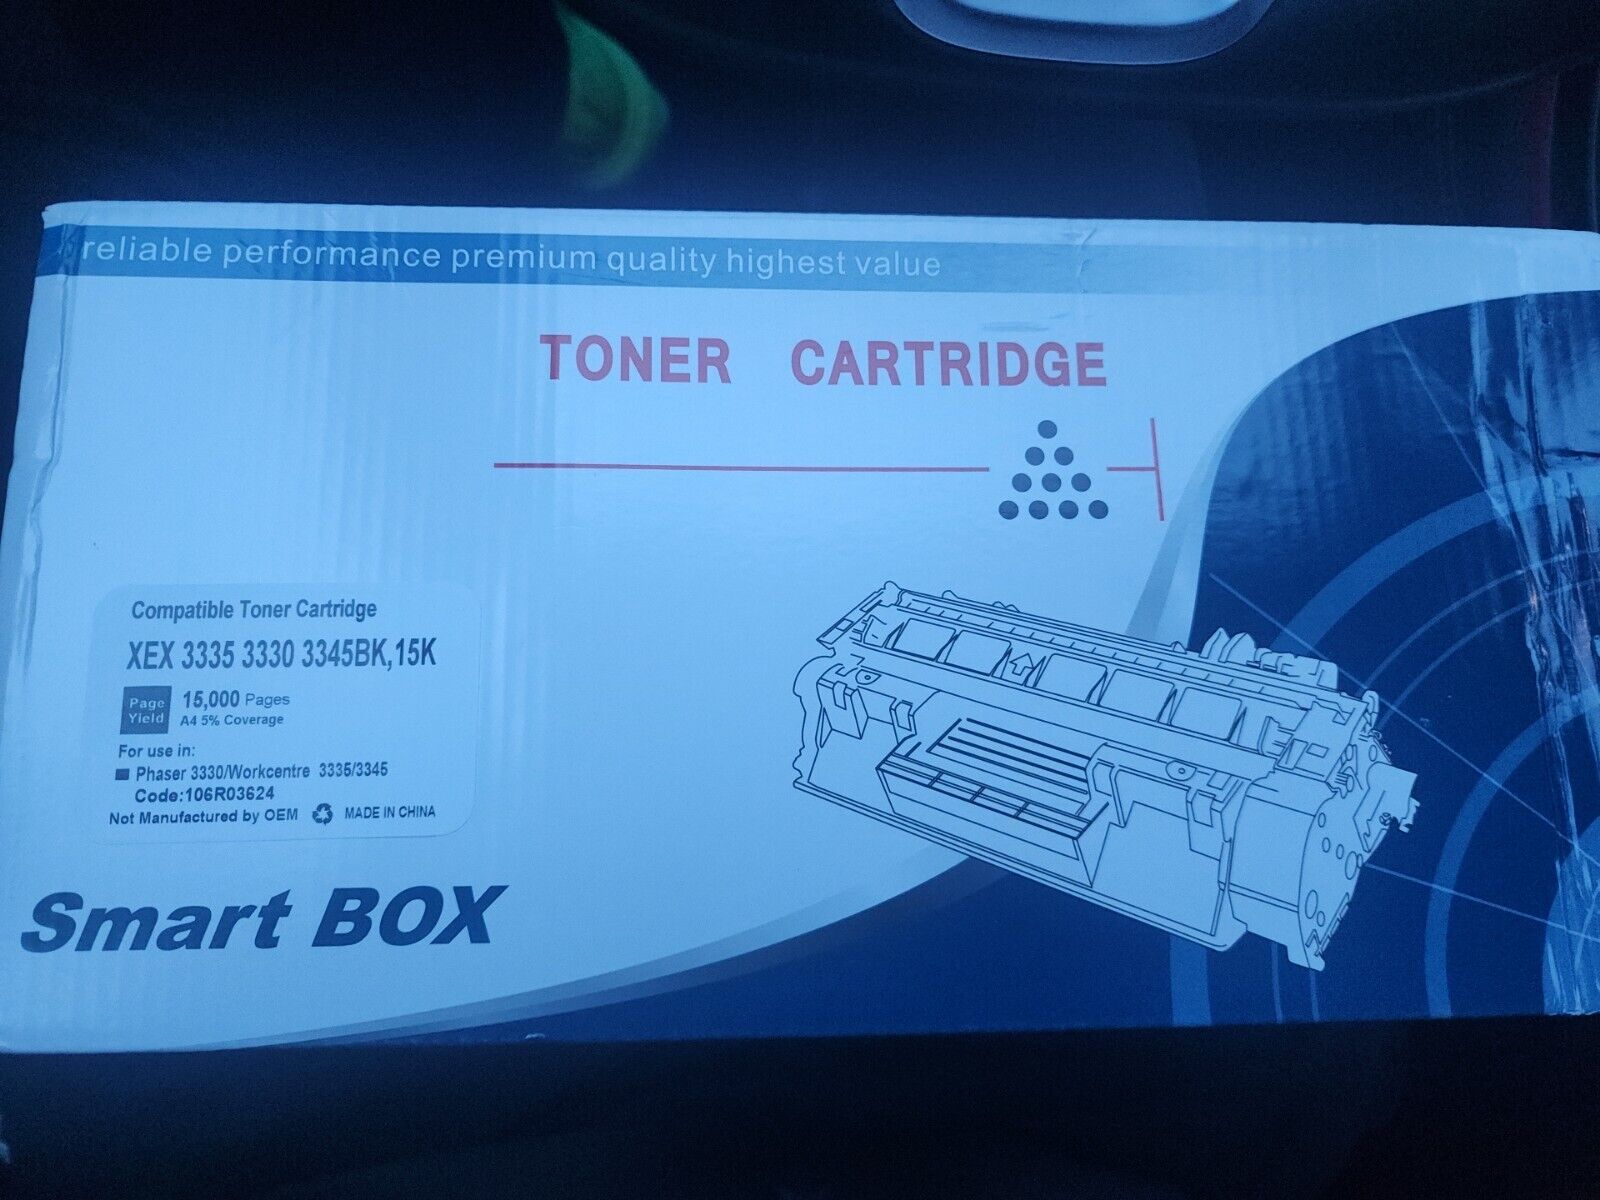 Smart Box Toner Cartridge XEX 3330 3345BK Phaser 3330/ Workcenetre 3335/3345 New